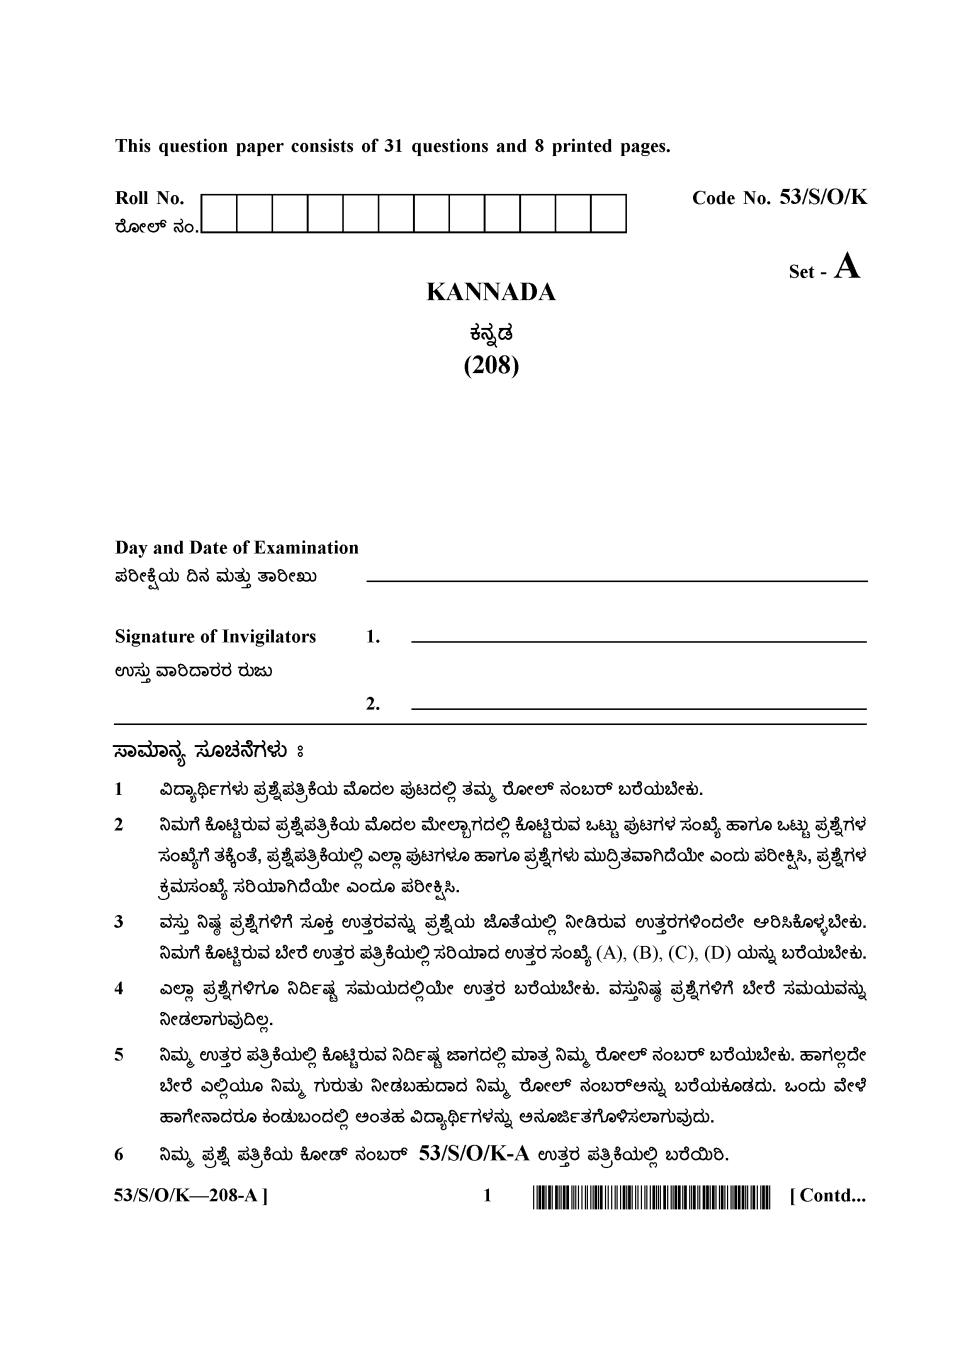 NIOS Class 10 Question Paper Oct 2016 - Kannada - Page 1